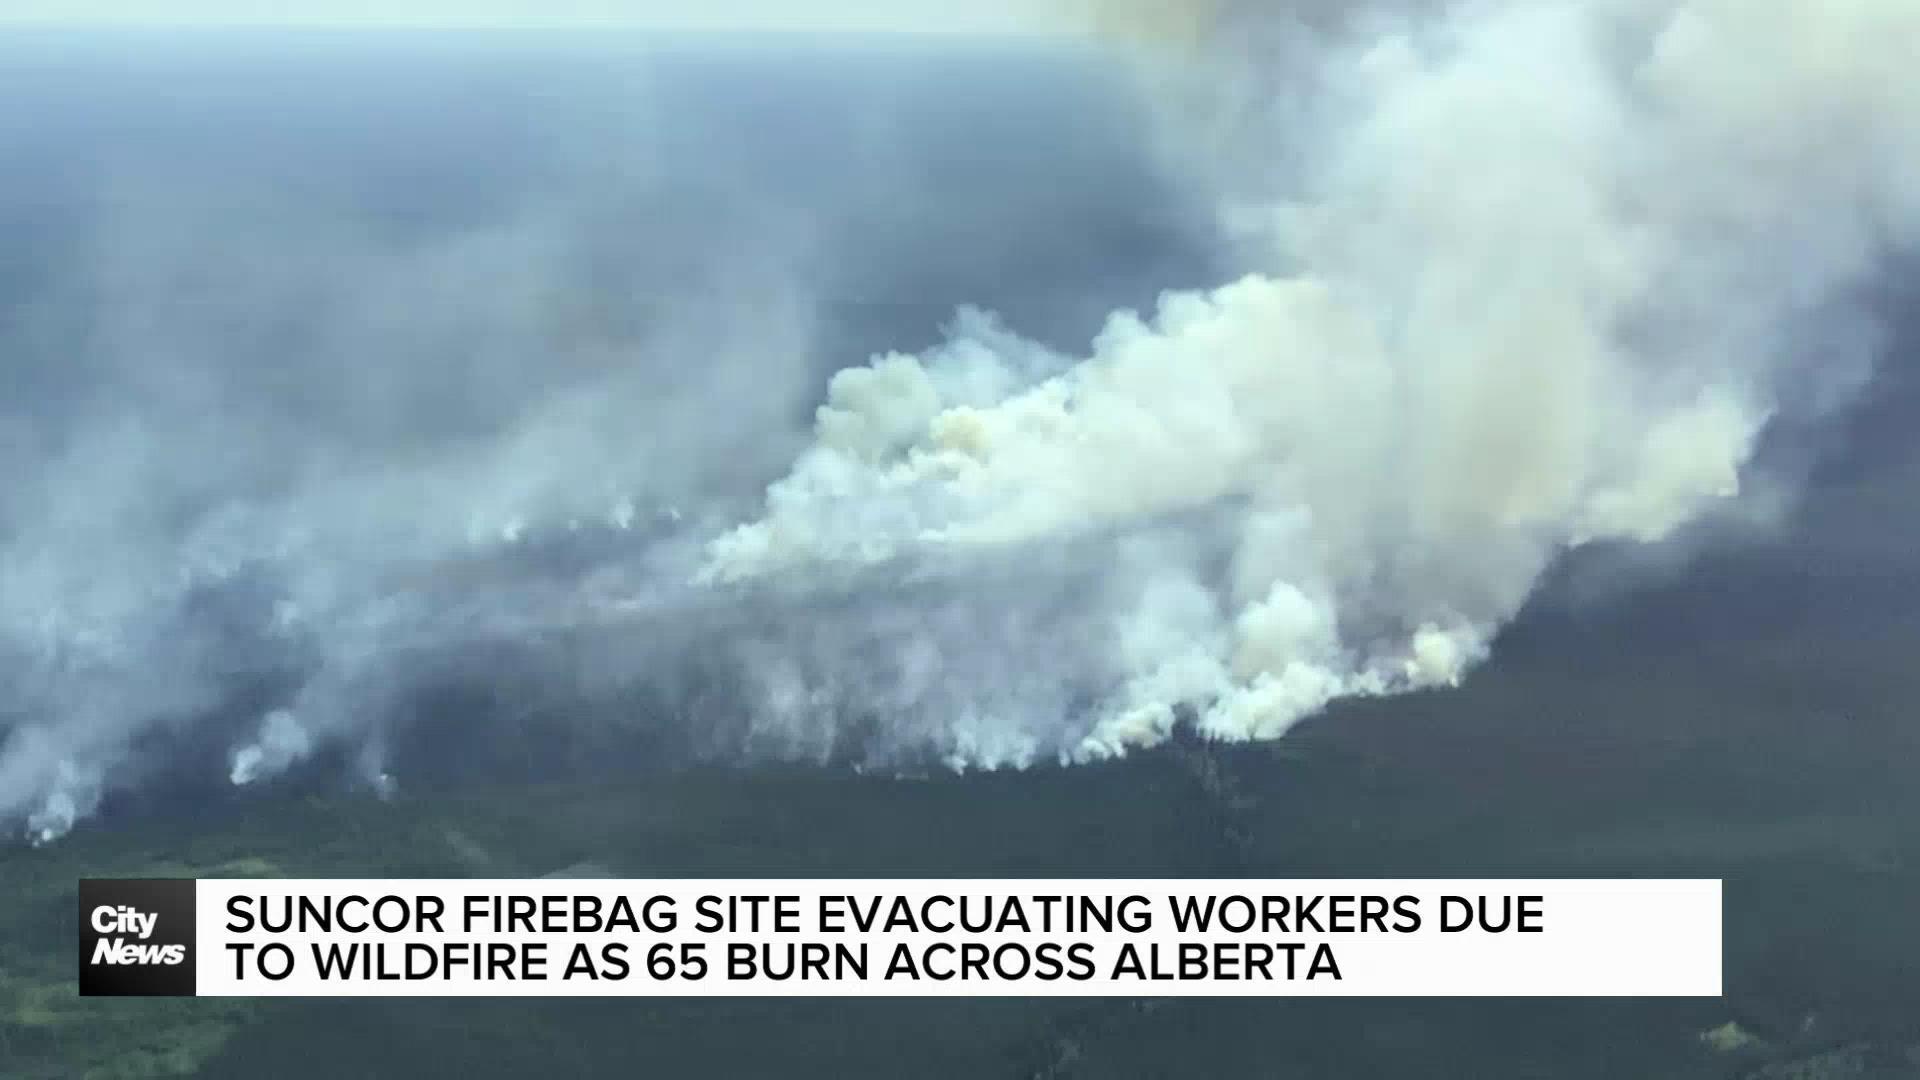 Wildfire prompts worker evacuation in Alberta